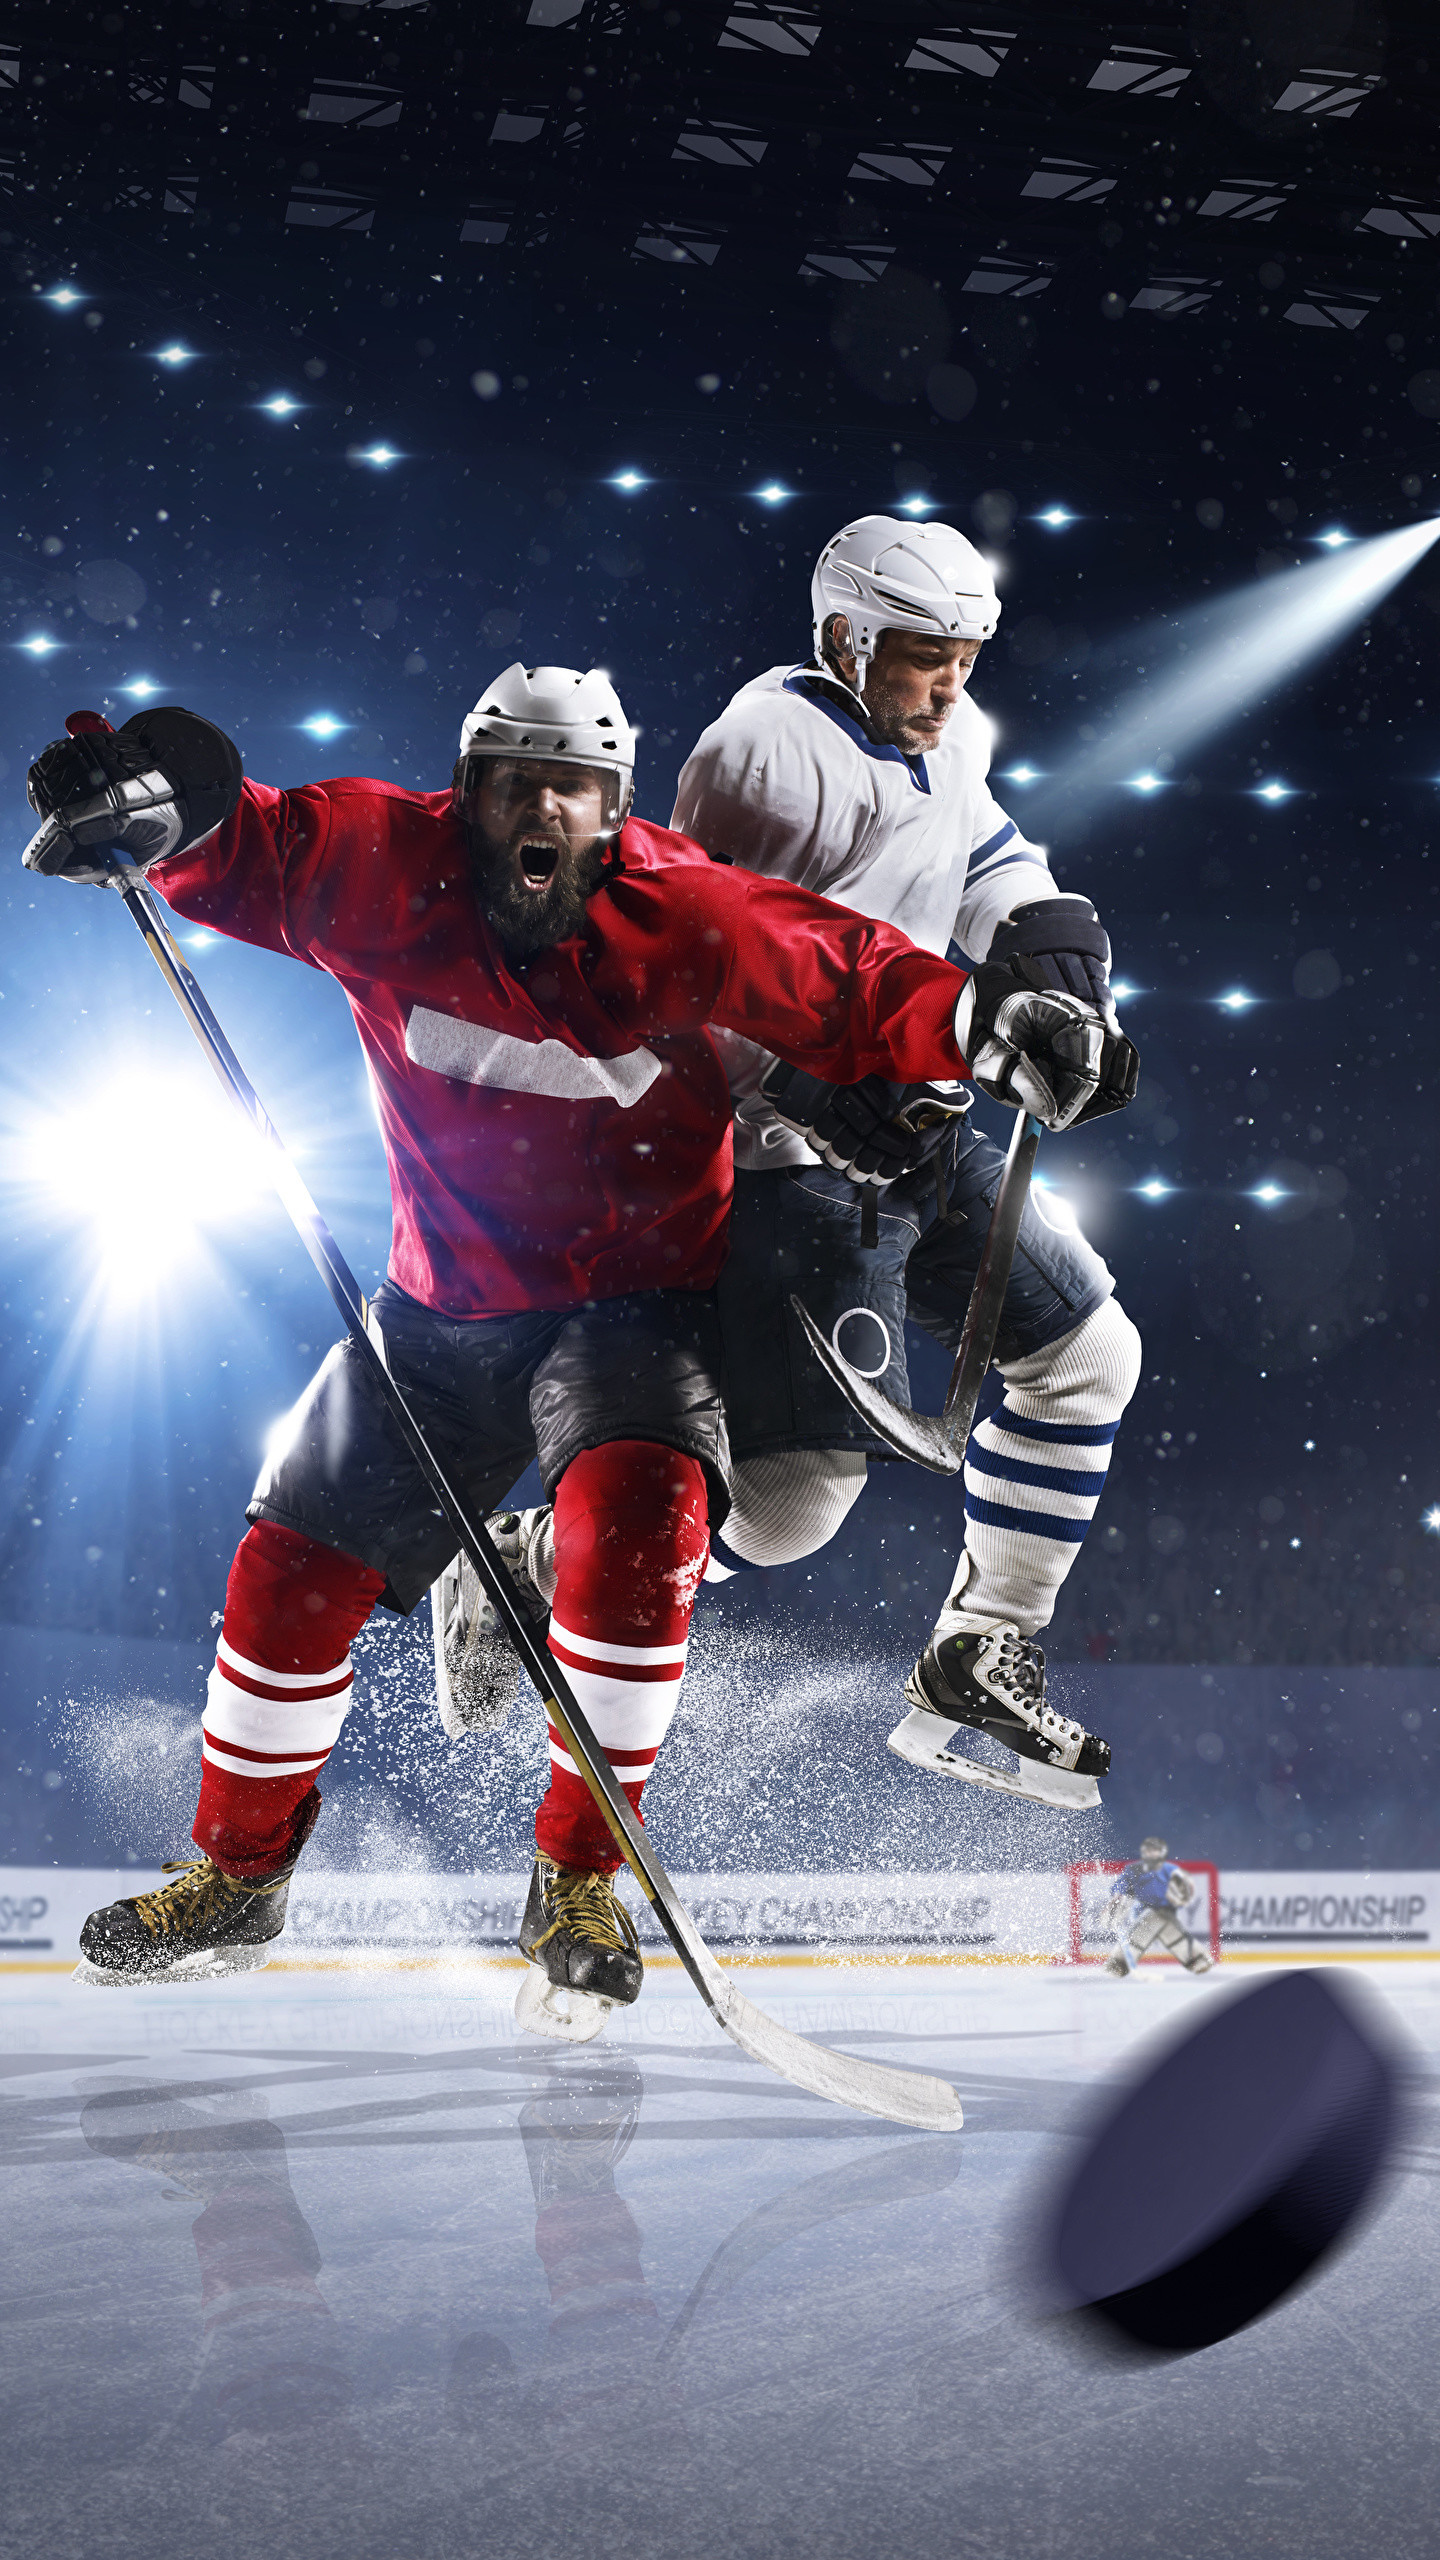 hockey wallpaper,bandy,ice hockey equipment,ice hockey,hockey,stick and ball games